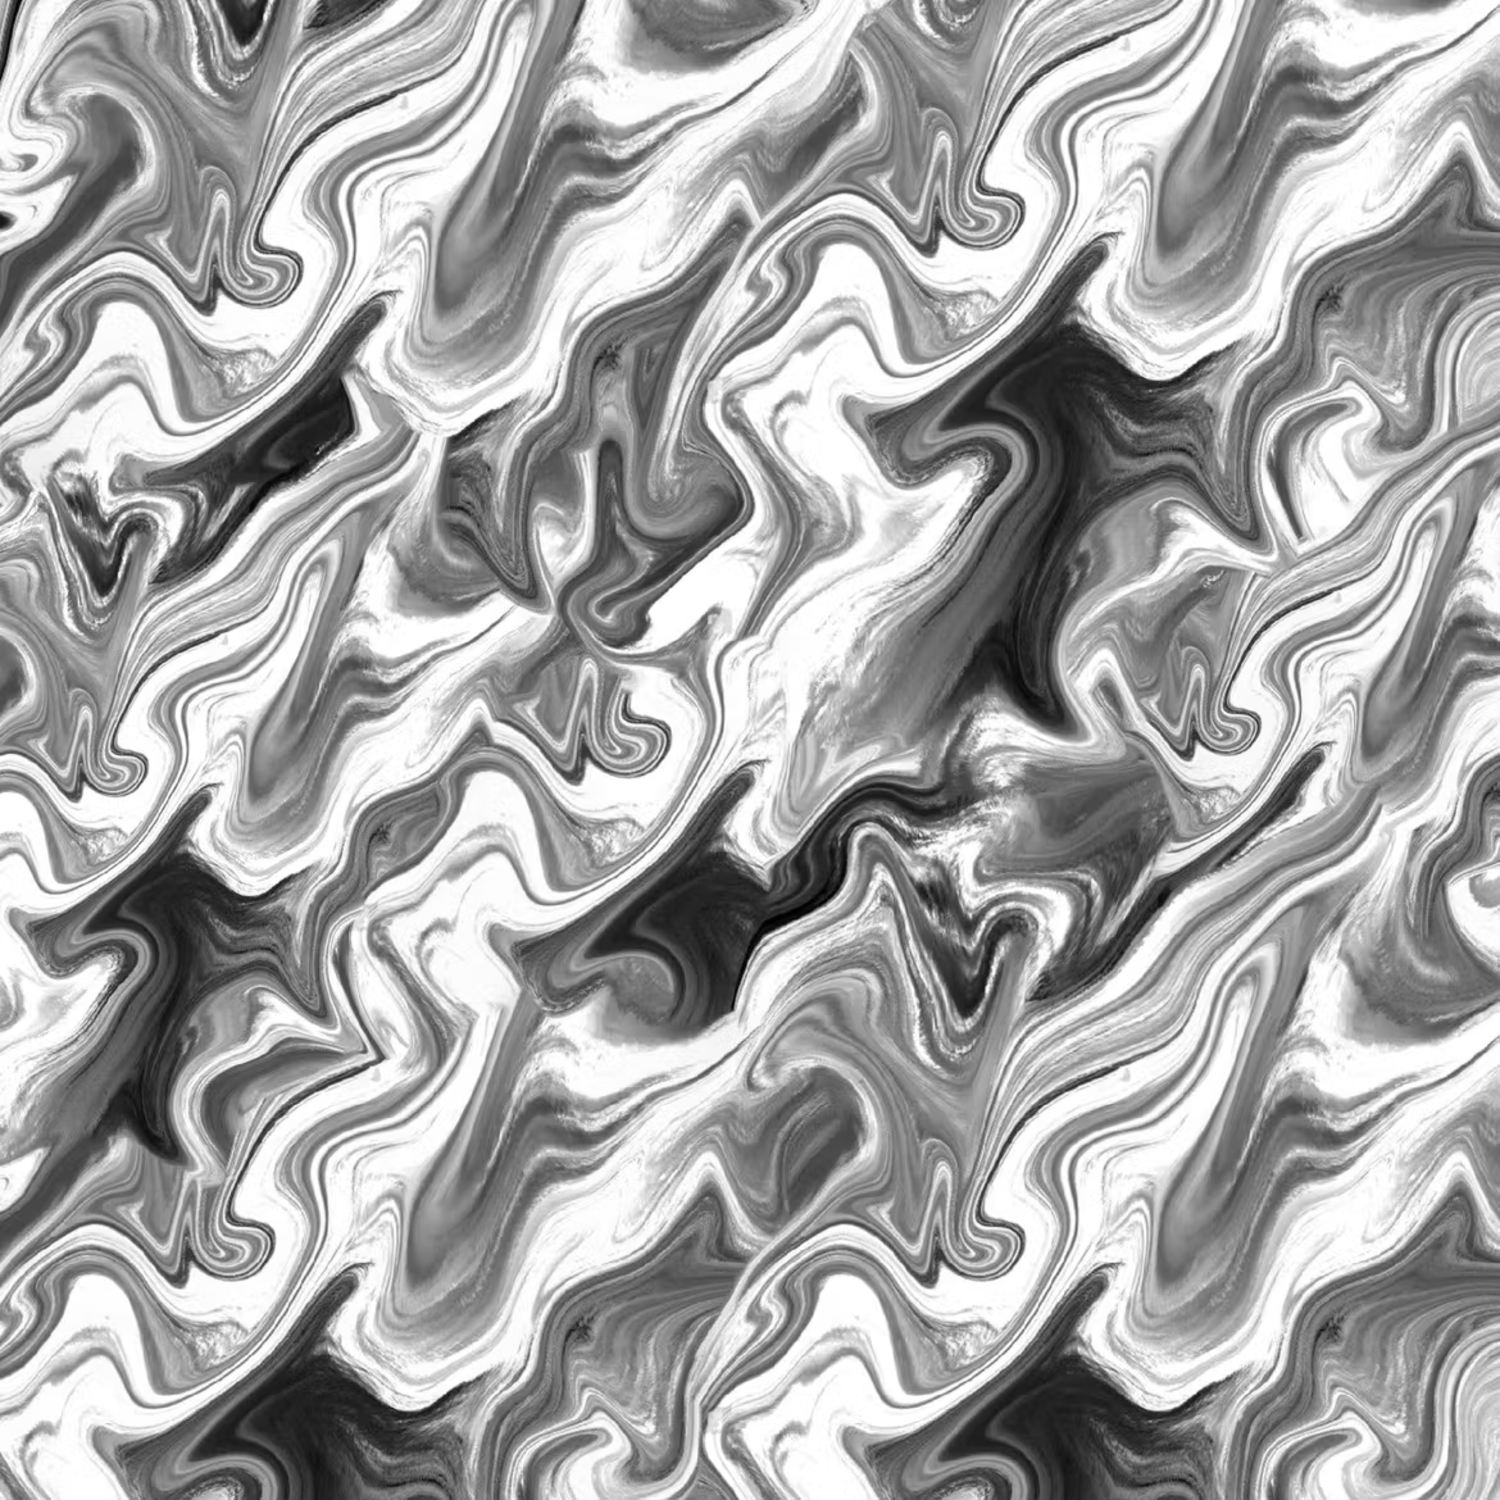 6085 高分辨率液体抽象背景纹理素材-Liquid Abstract Background